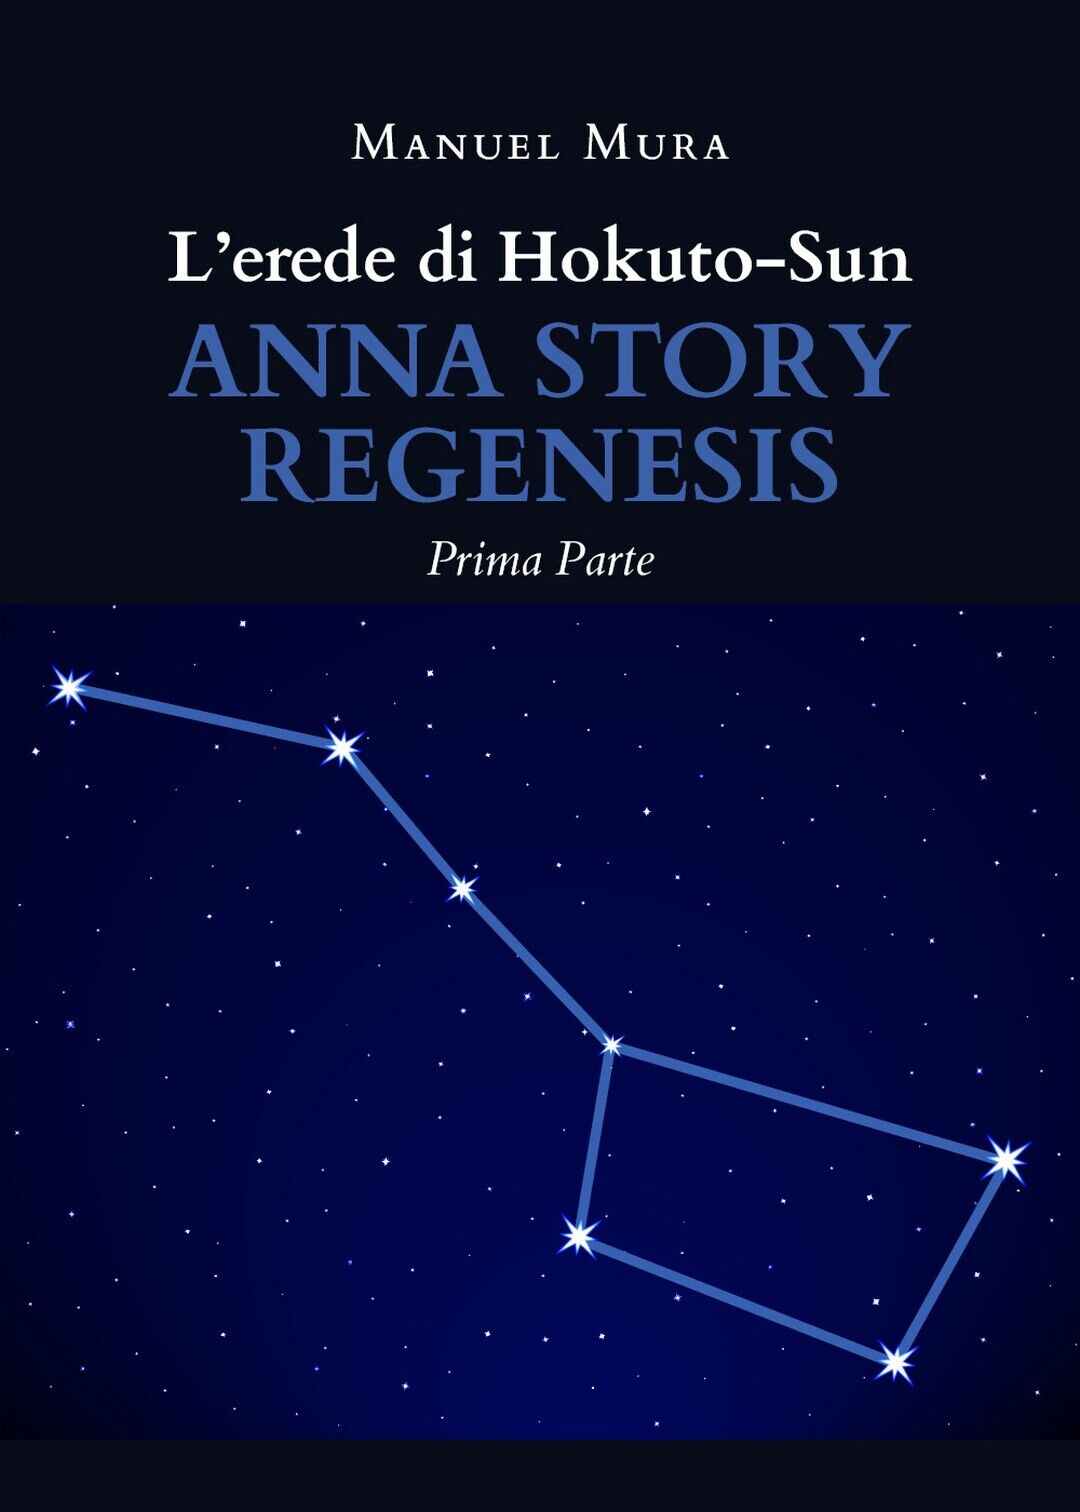 L'erede di Hokuto-Sun. Anna story regenesis (prima parte)  di Manuel Mura,  2020